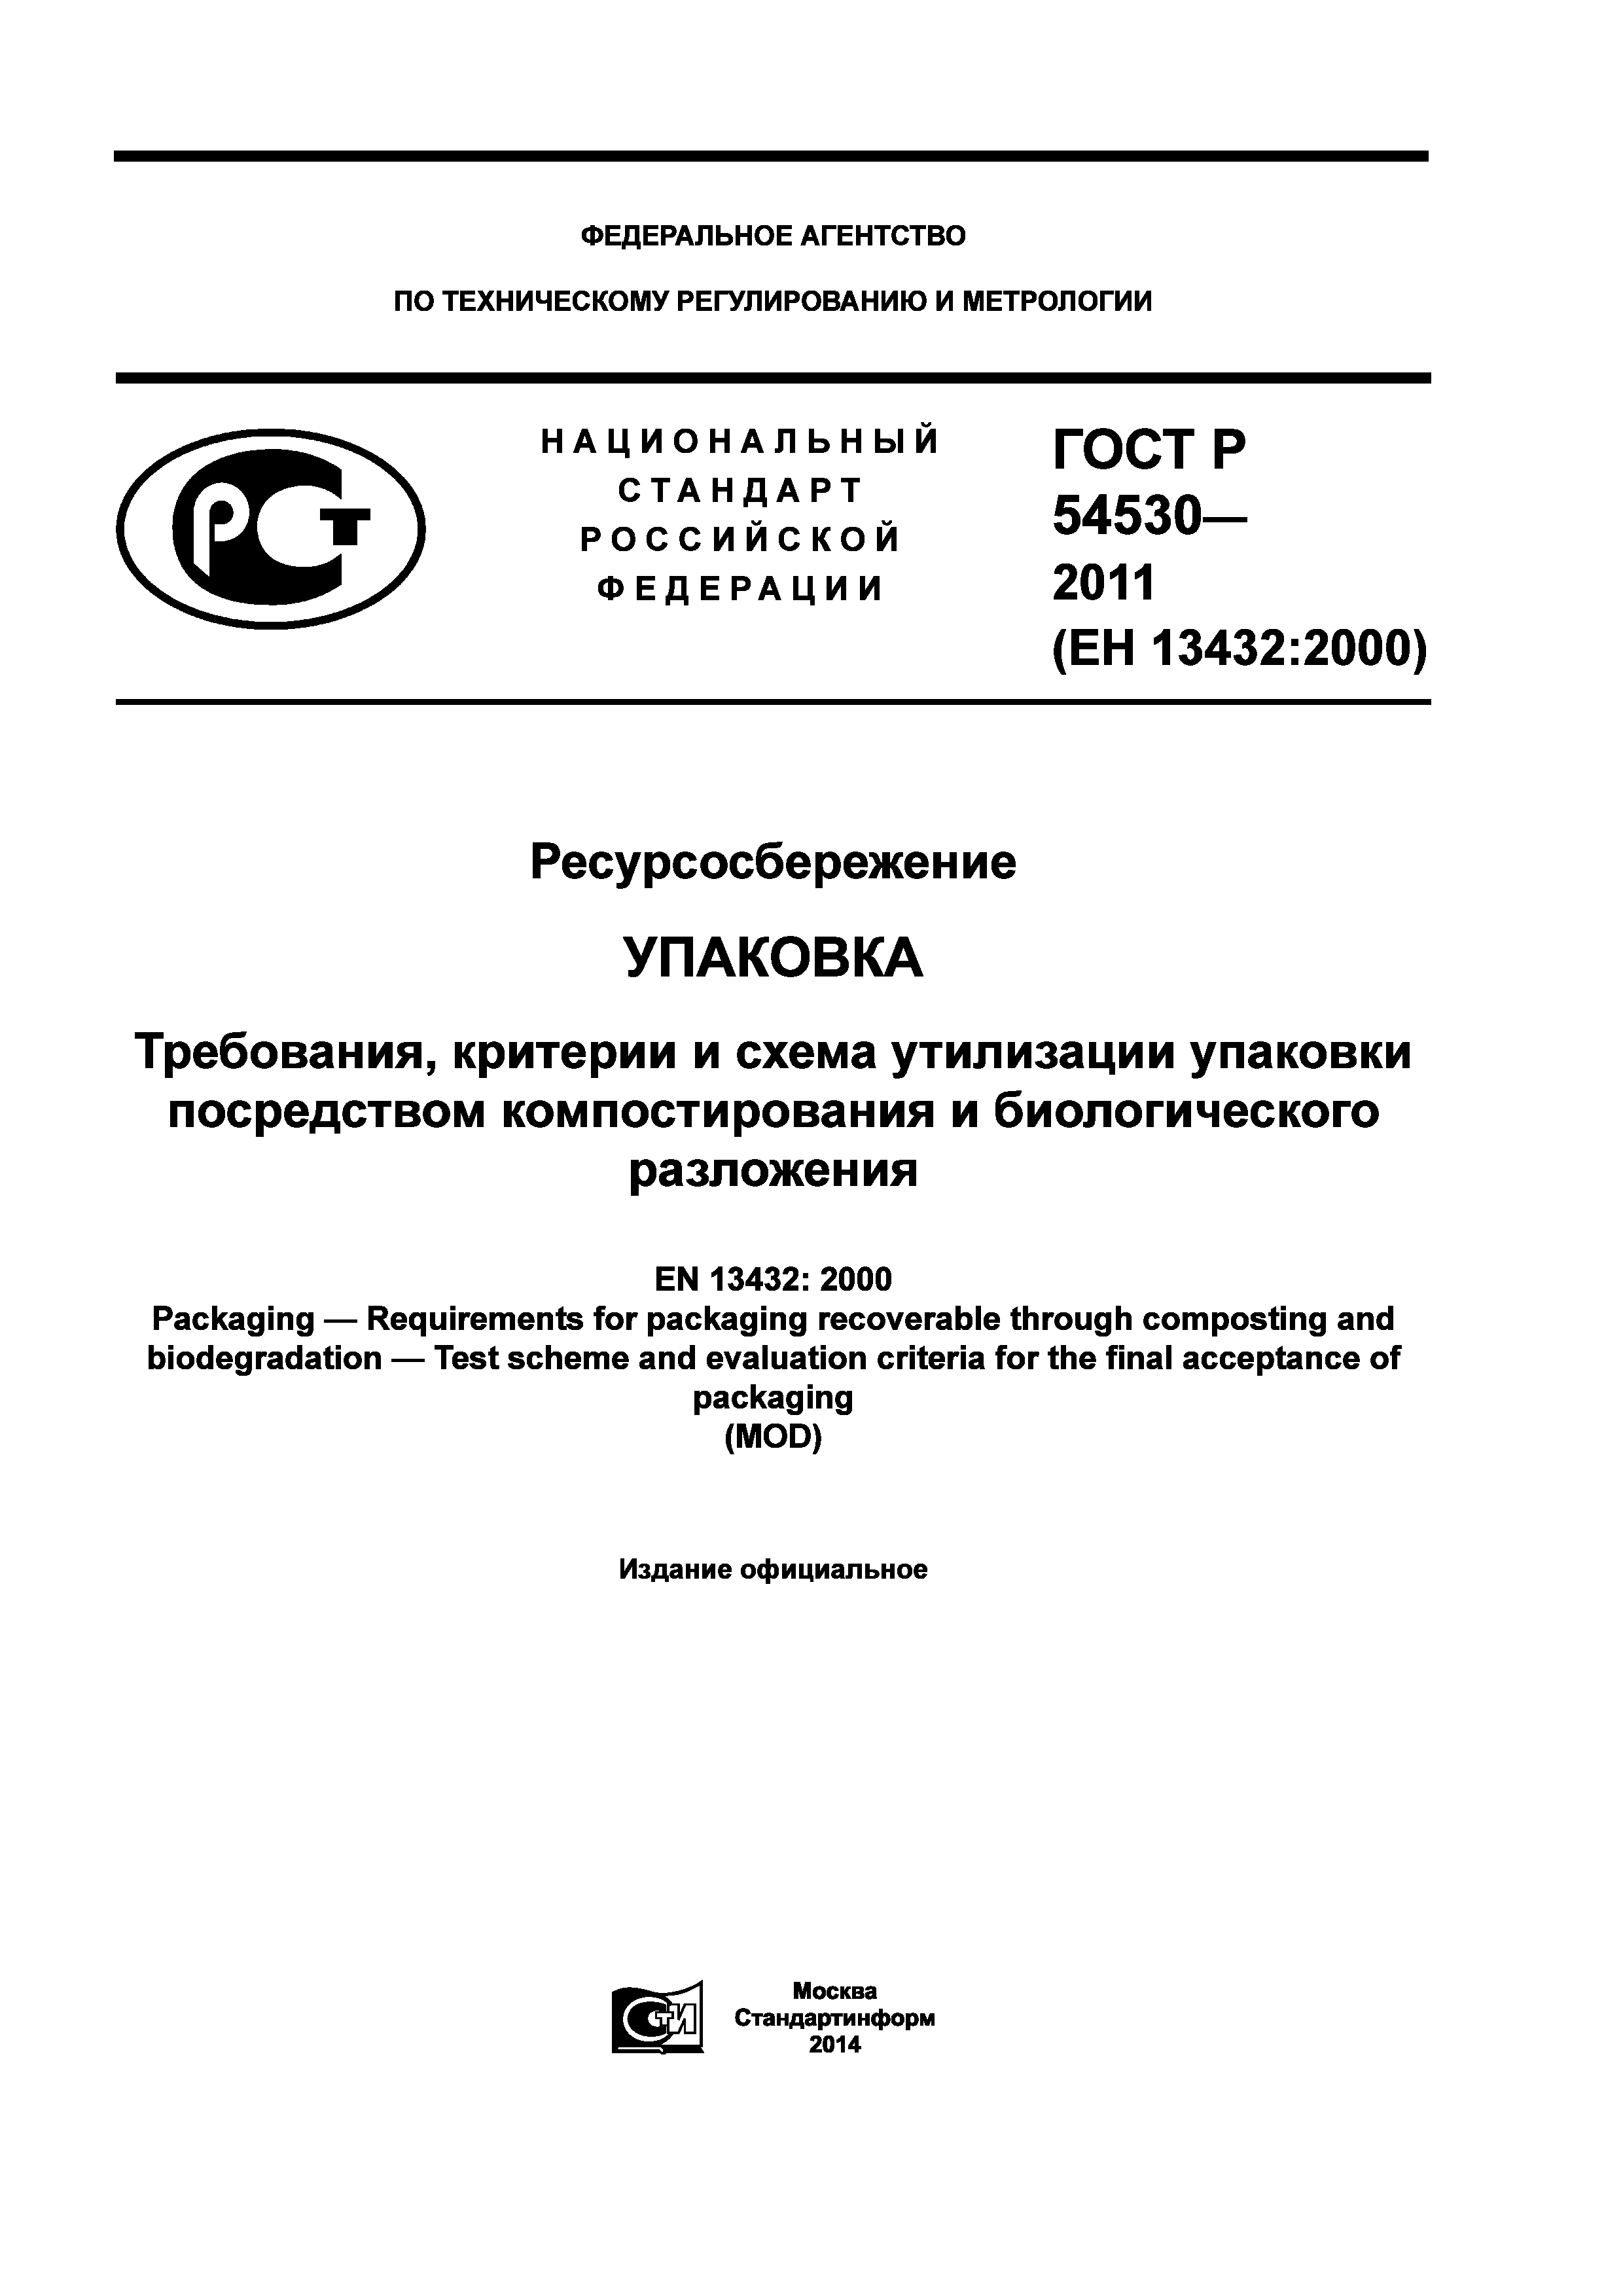 ГОСТ Р 54530-2011